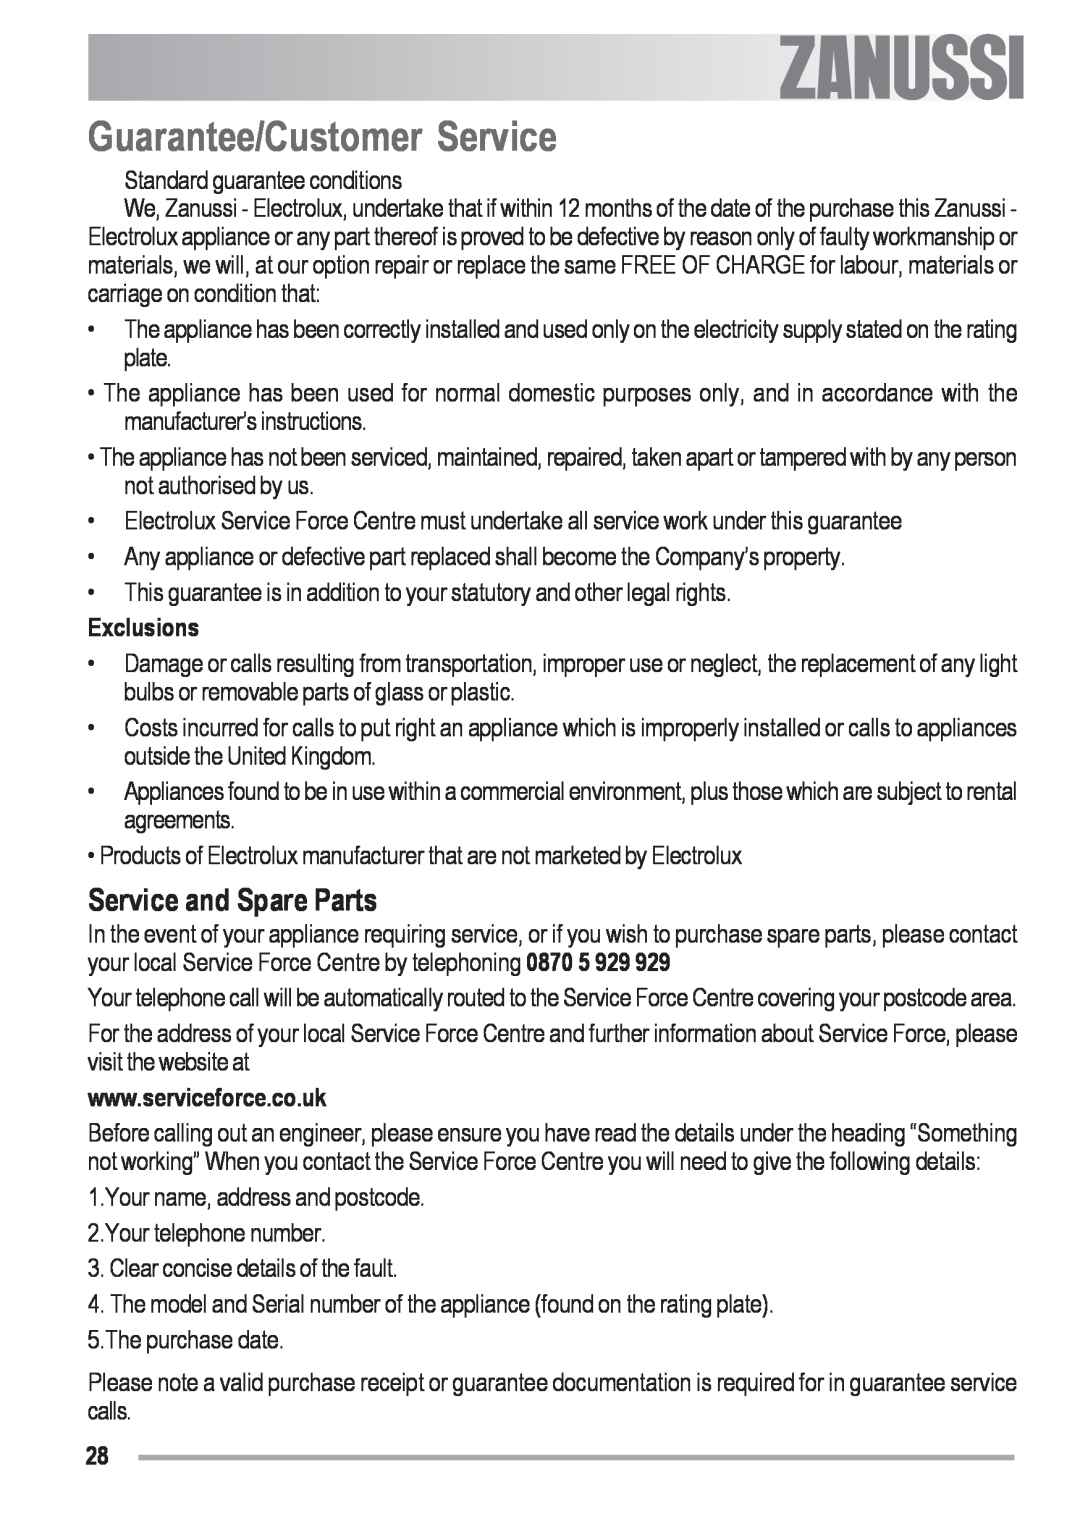 Zanussi ZOB 330 manual Guarantee/Customer Service, Service and Spare Parts, Exclusions 